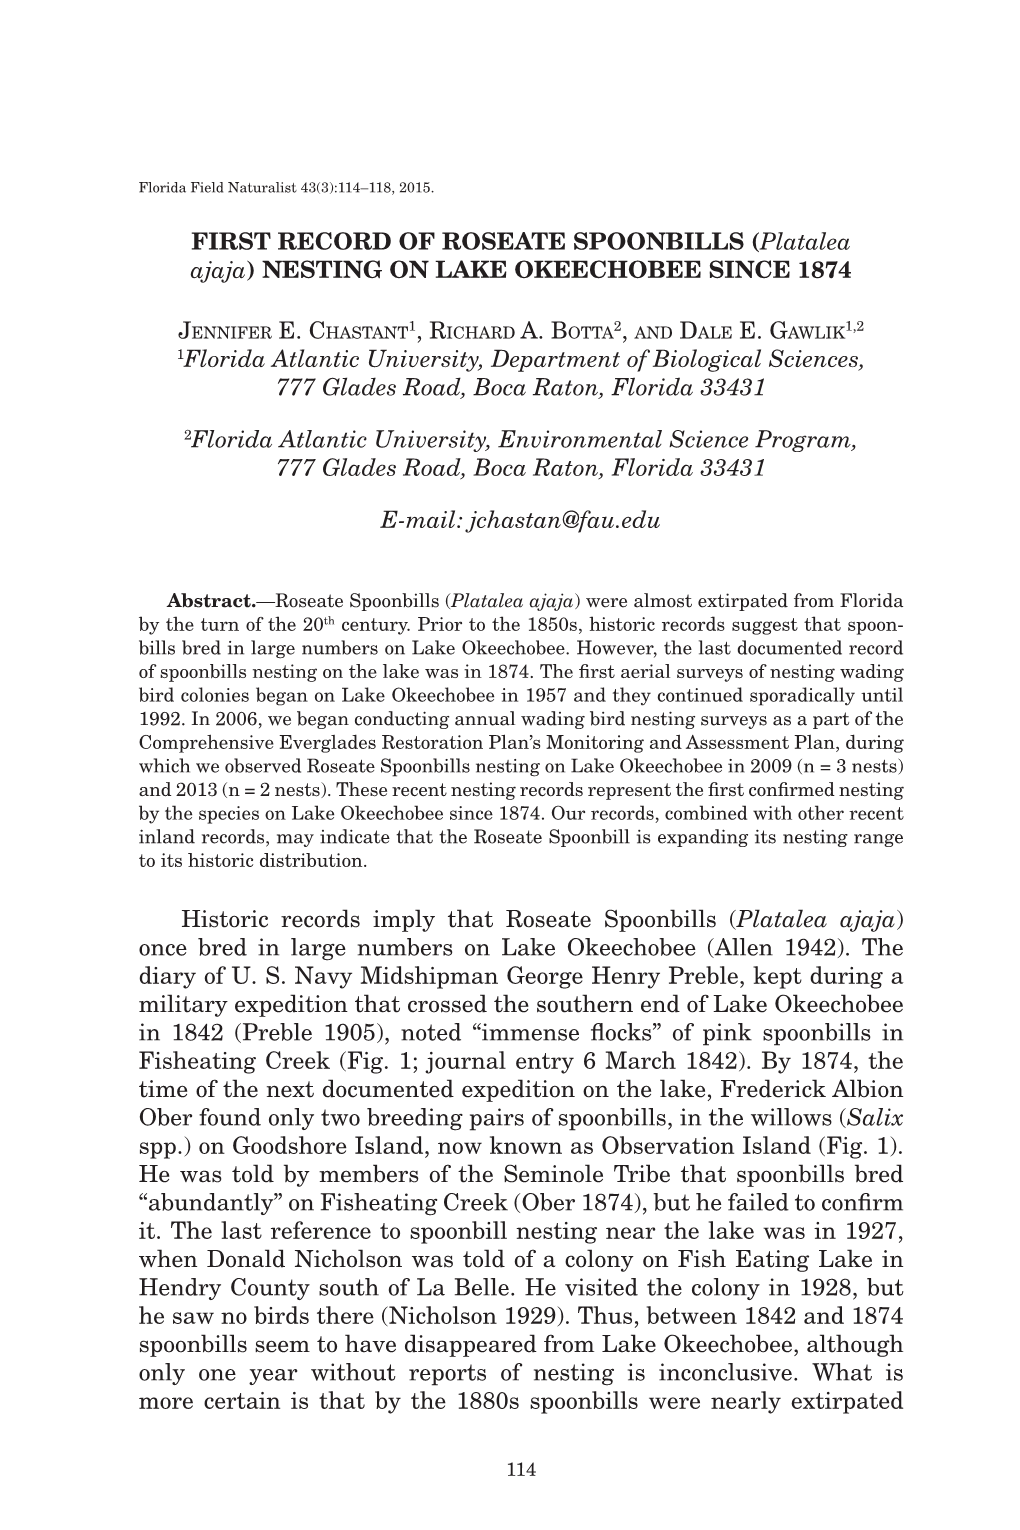 FIRST RECORD of ROSEATE SPOONBILLS (Platalea Ajaja) NESTING on LAKE OKEECHOBEE SINCE 1874